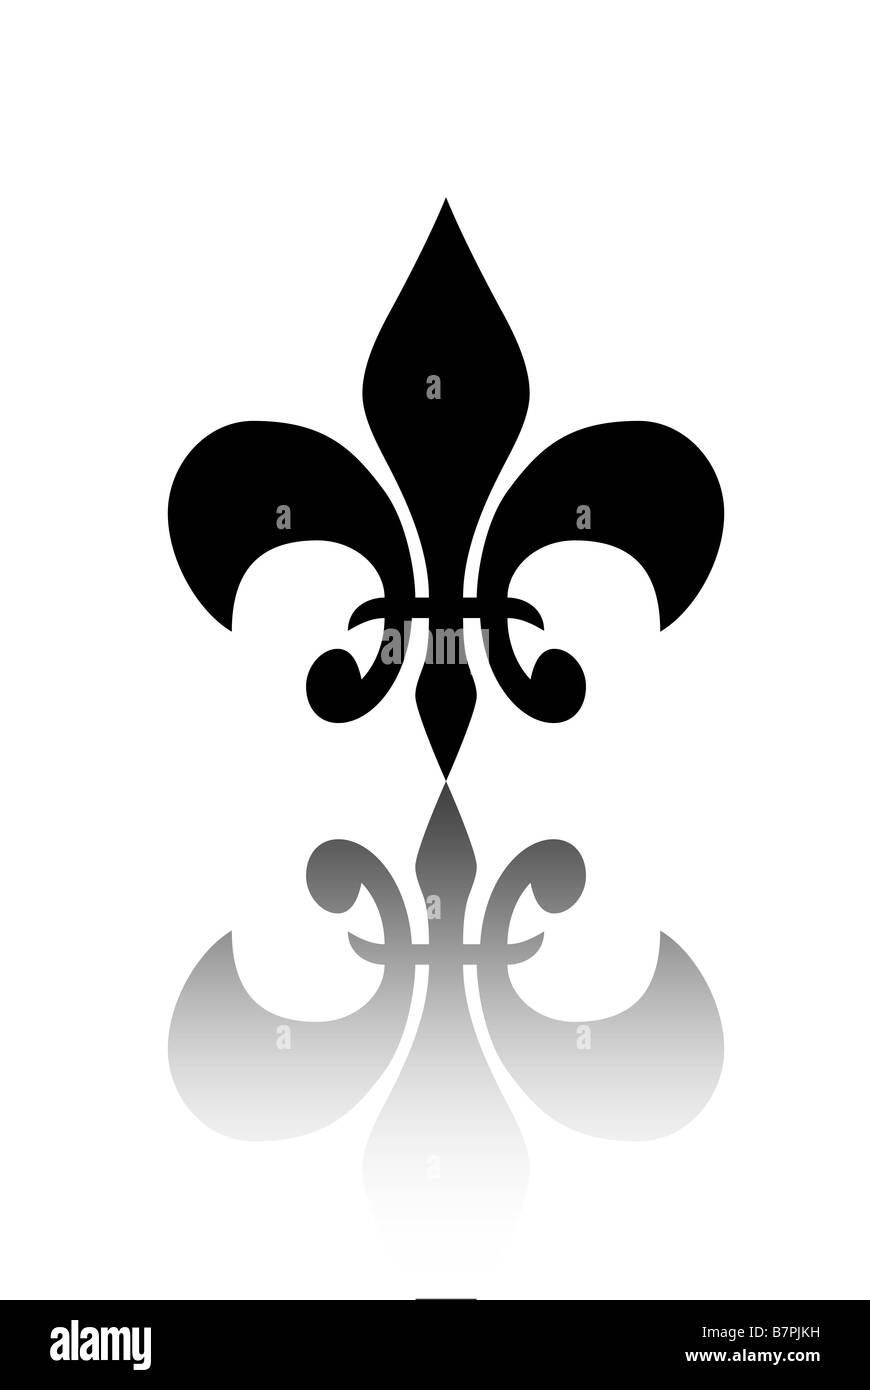 fleur de lis, reflection, symbol, black, white Stock Photo